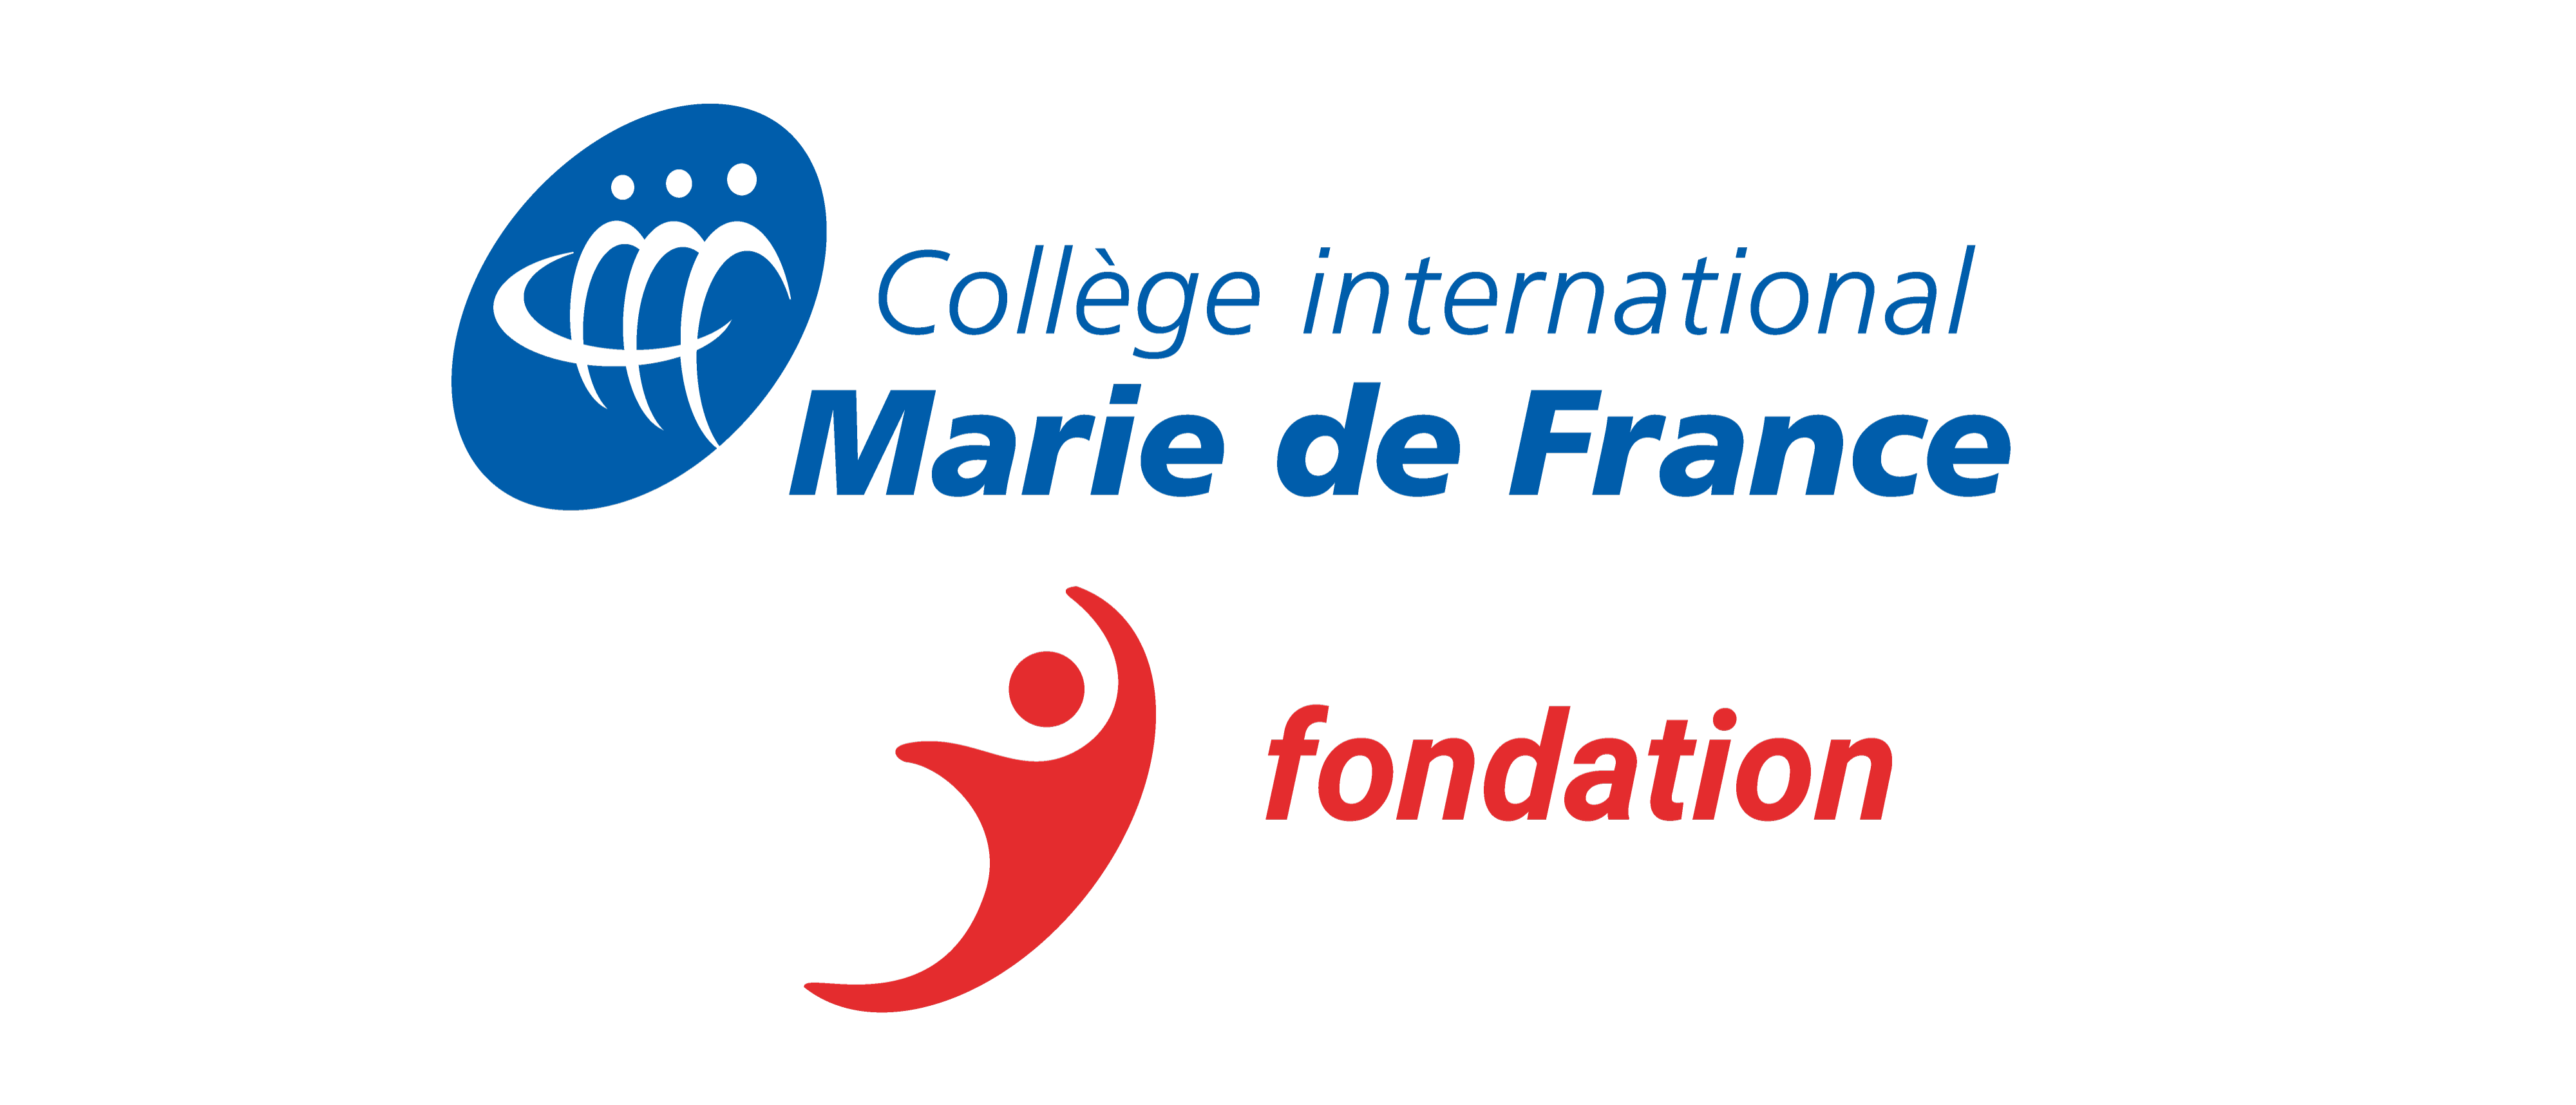 Fondation Collège international Marie de France